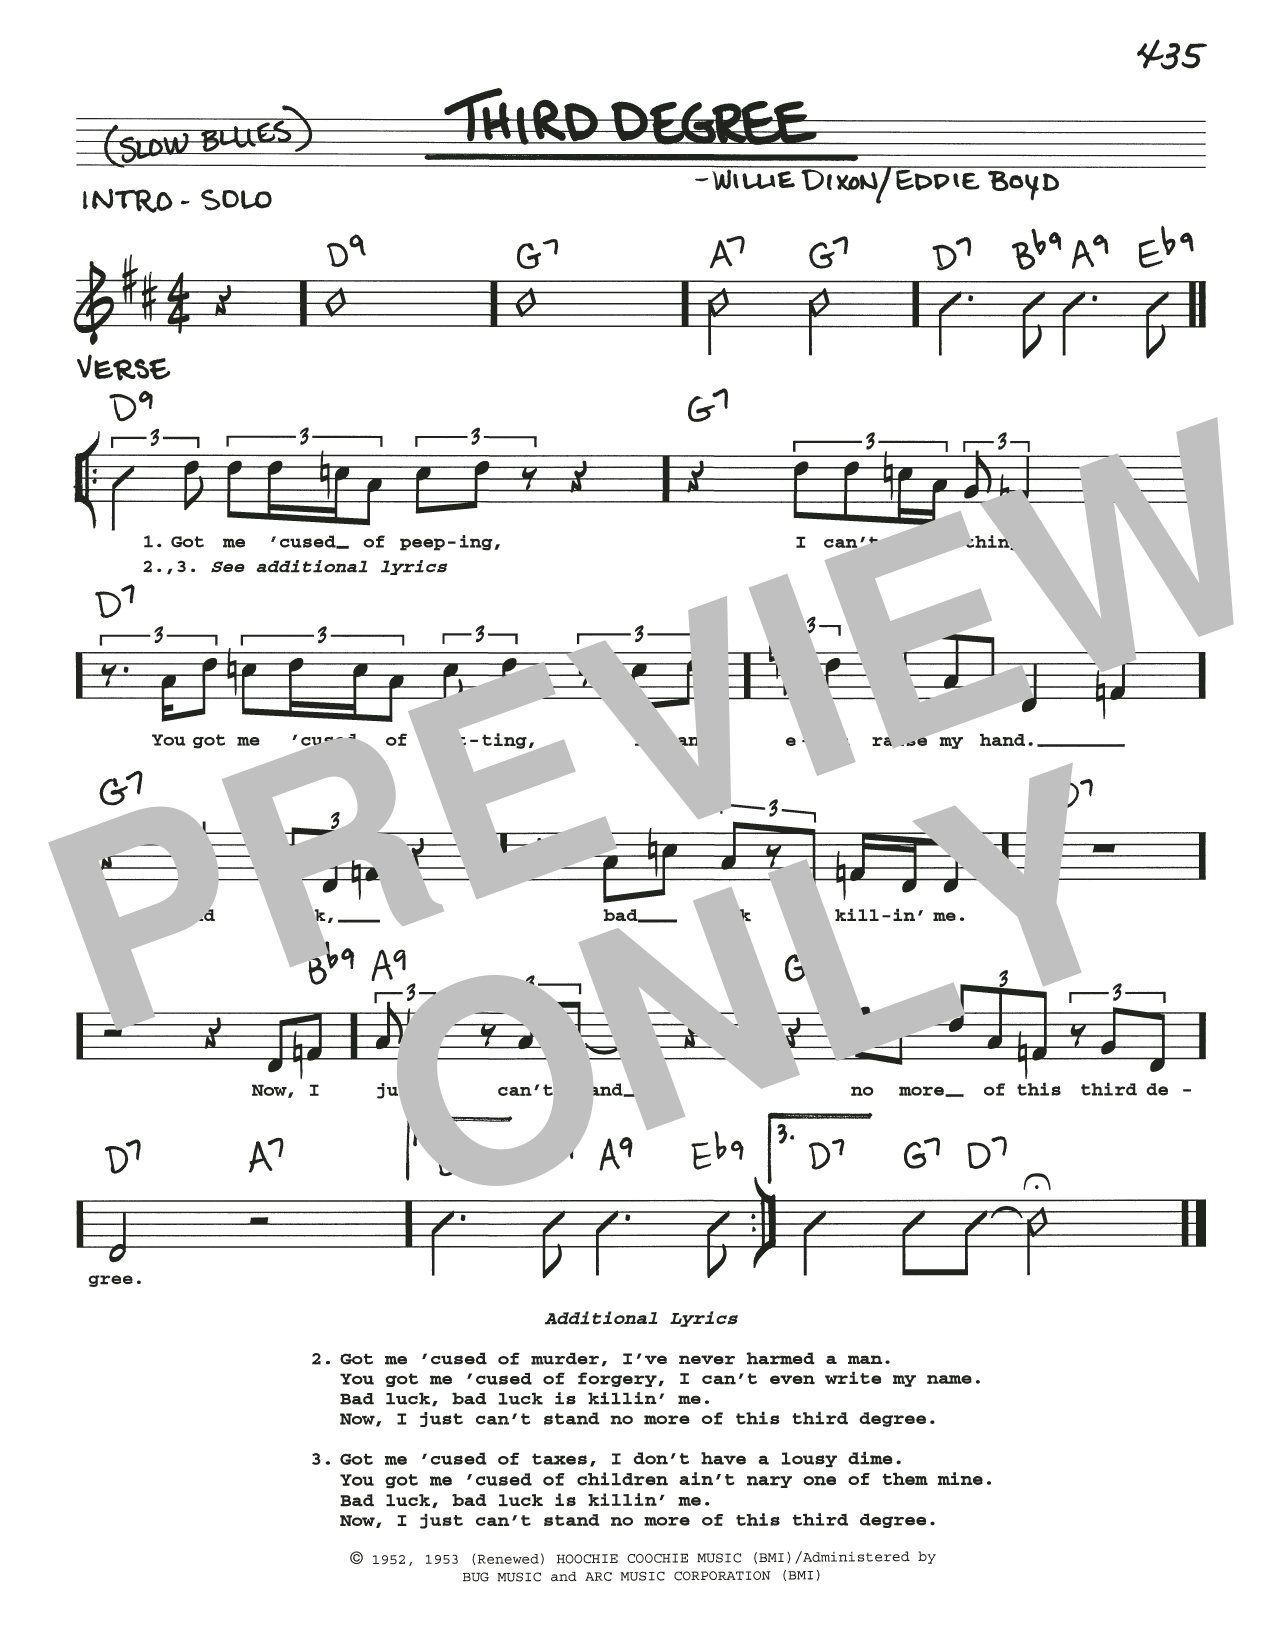 Eddie Boyd Third Degree Sheet Music Notes & Chords for Real Book – Melody, Lyrics & Chords - Download or Print PDF